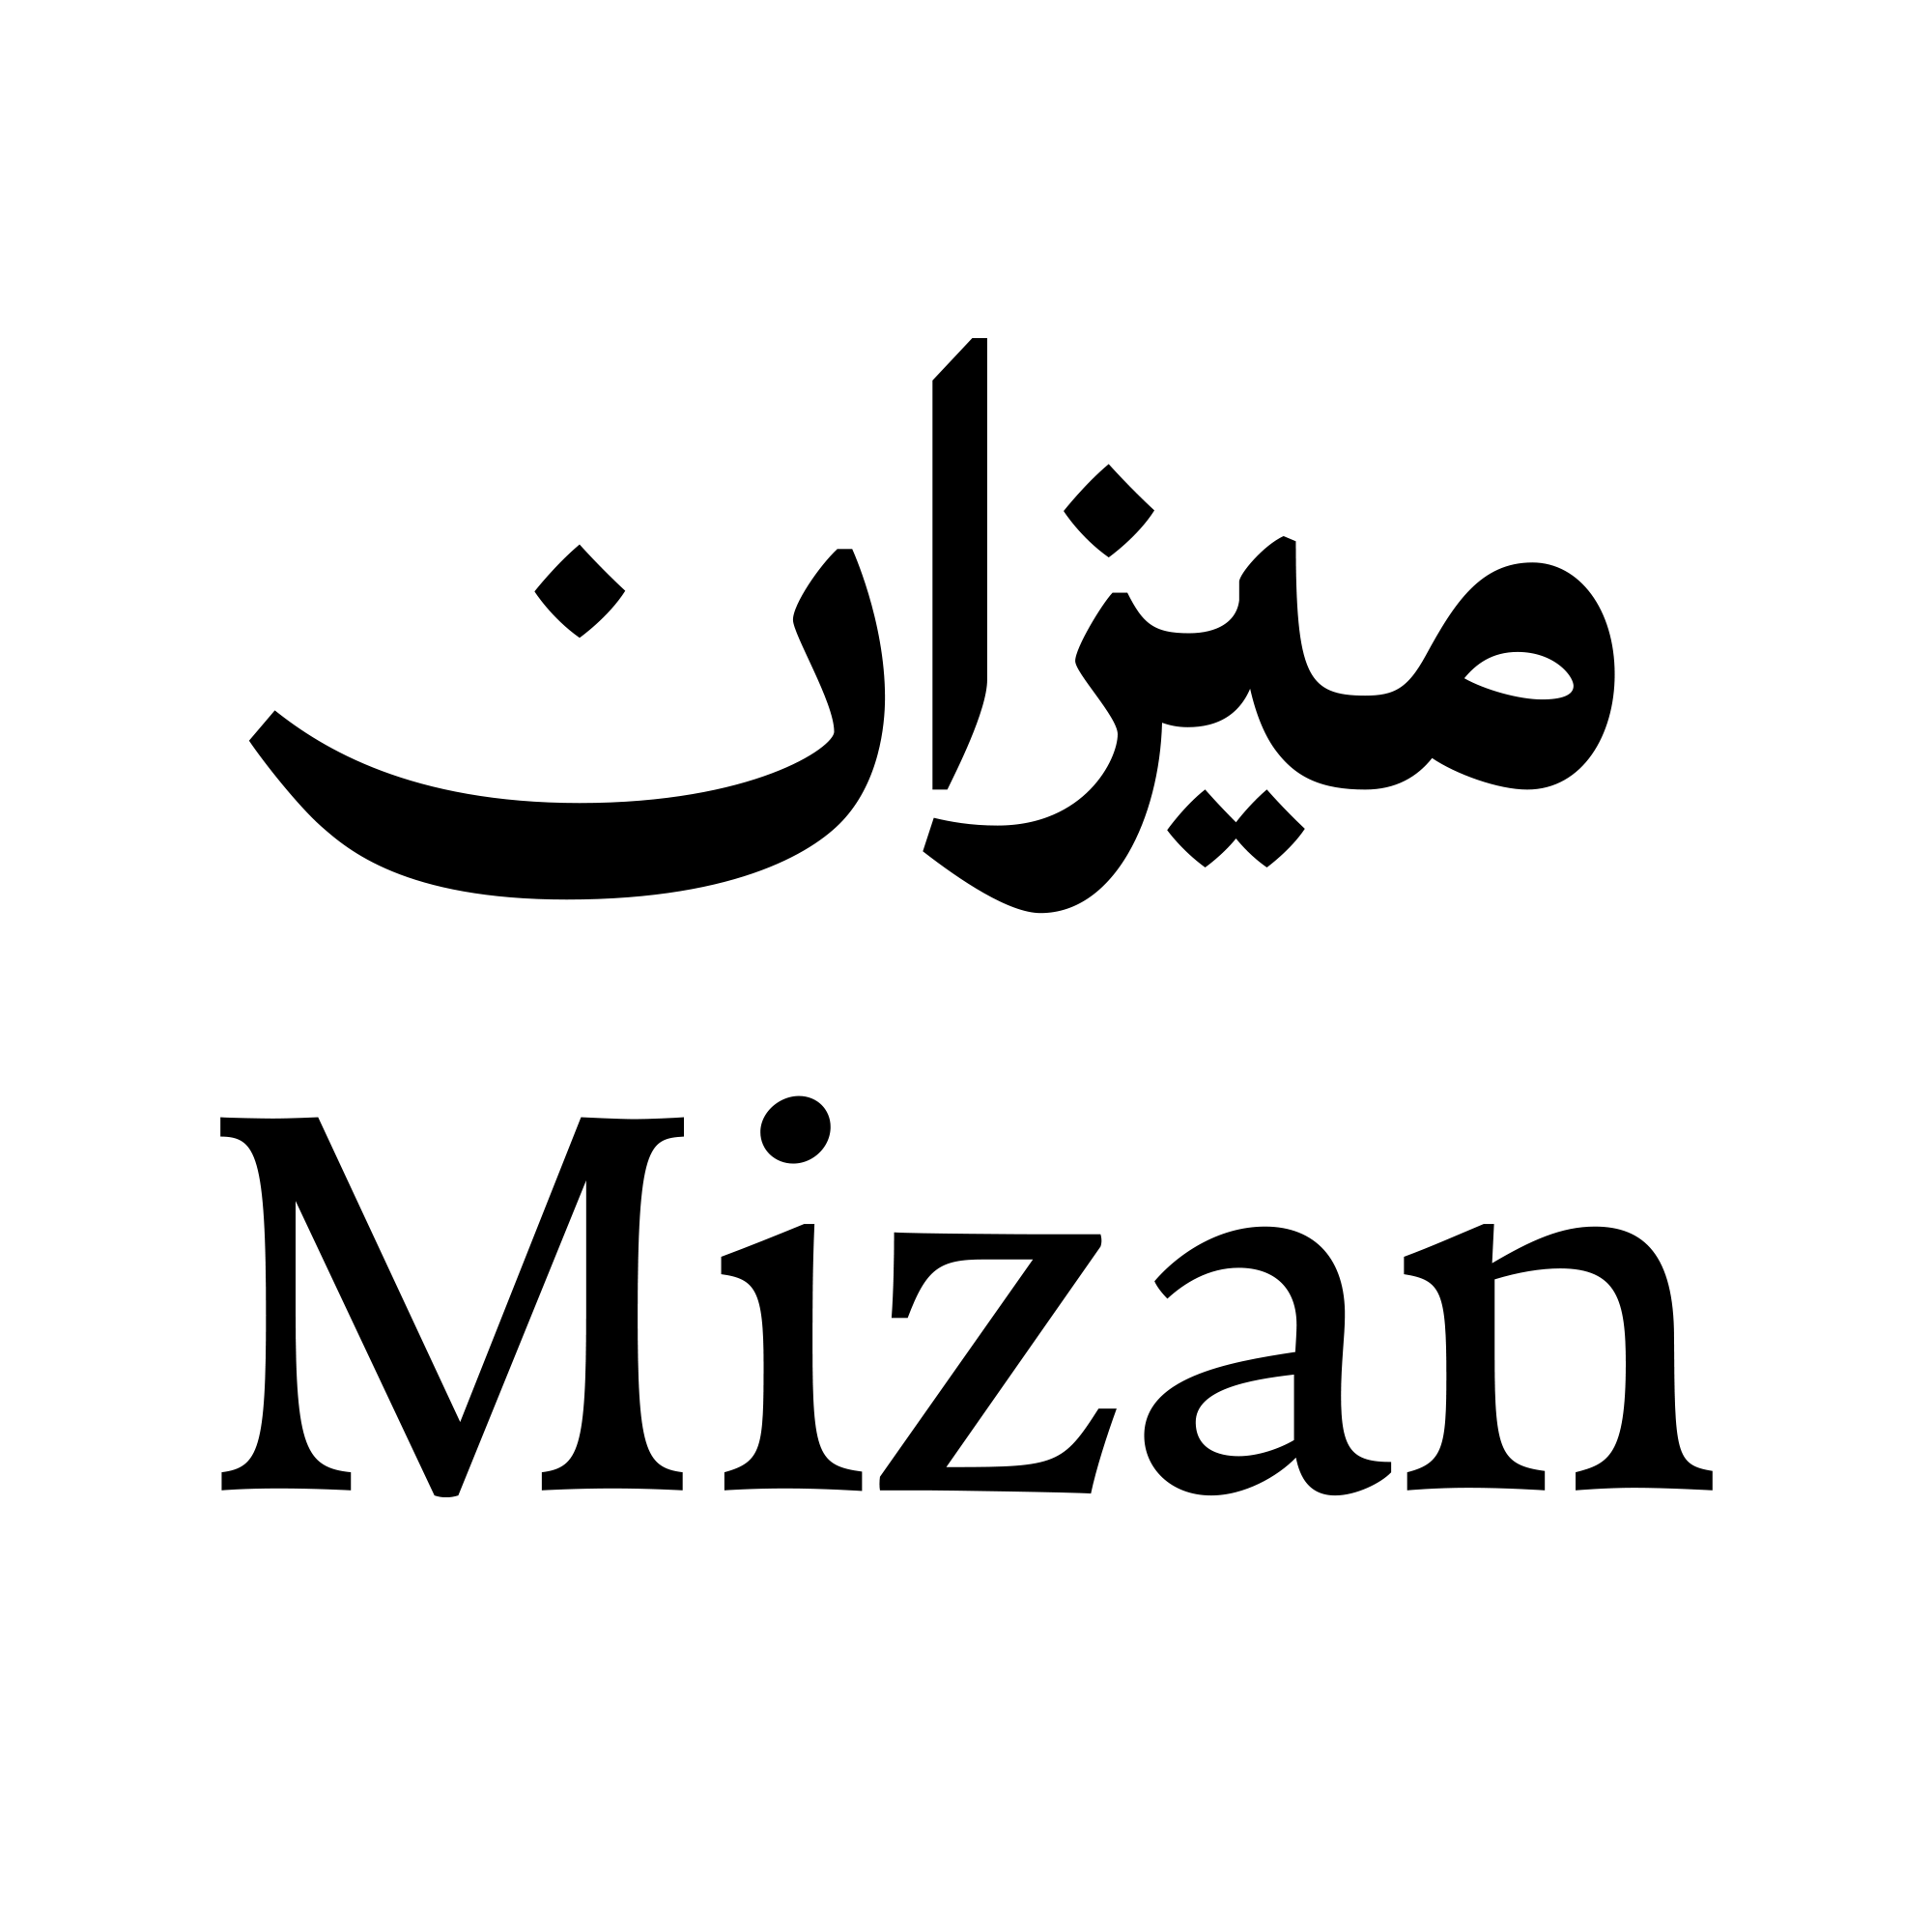 Mizan fonts